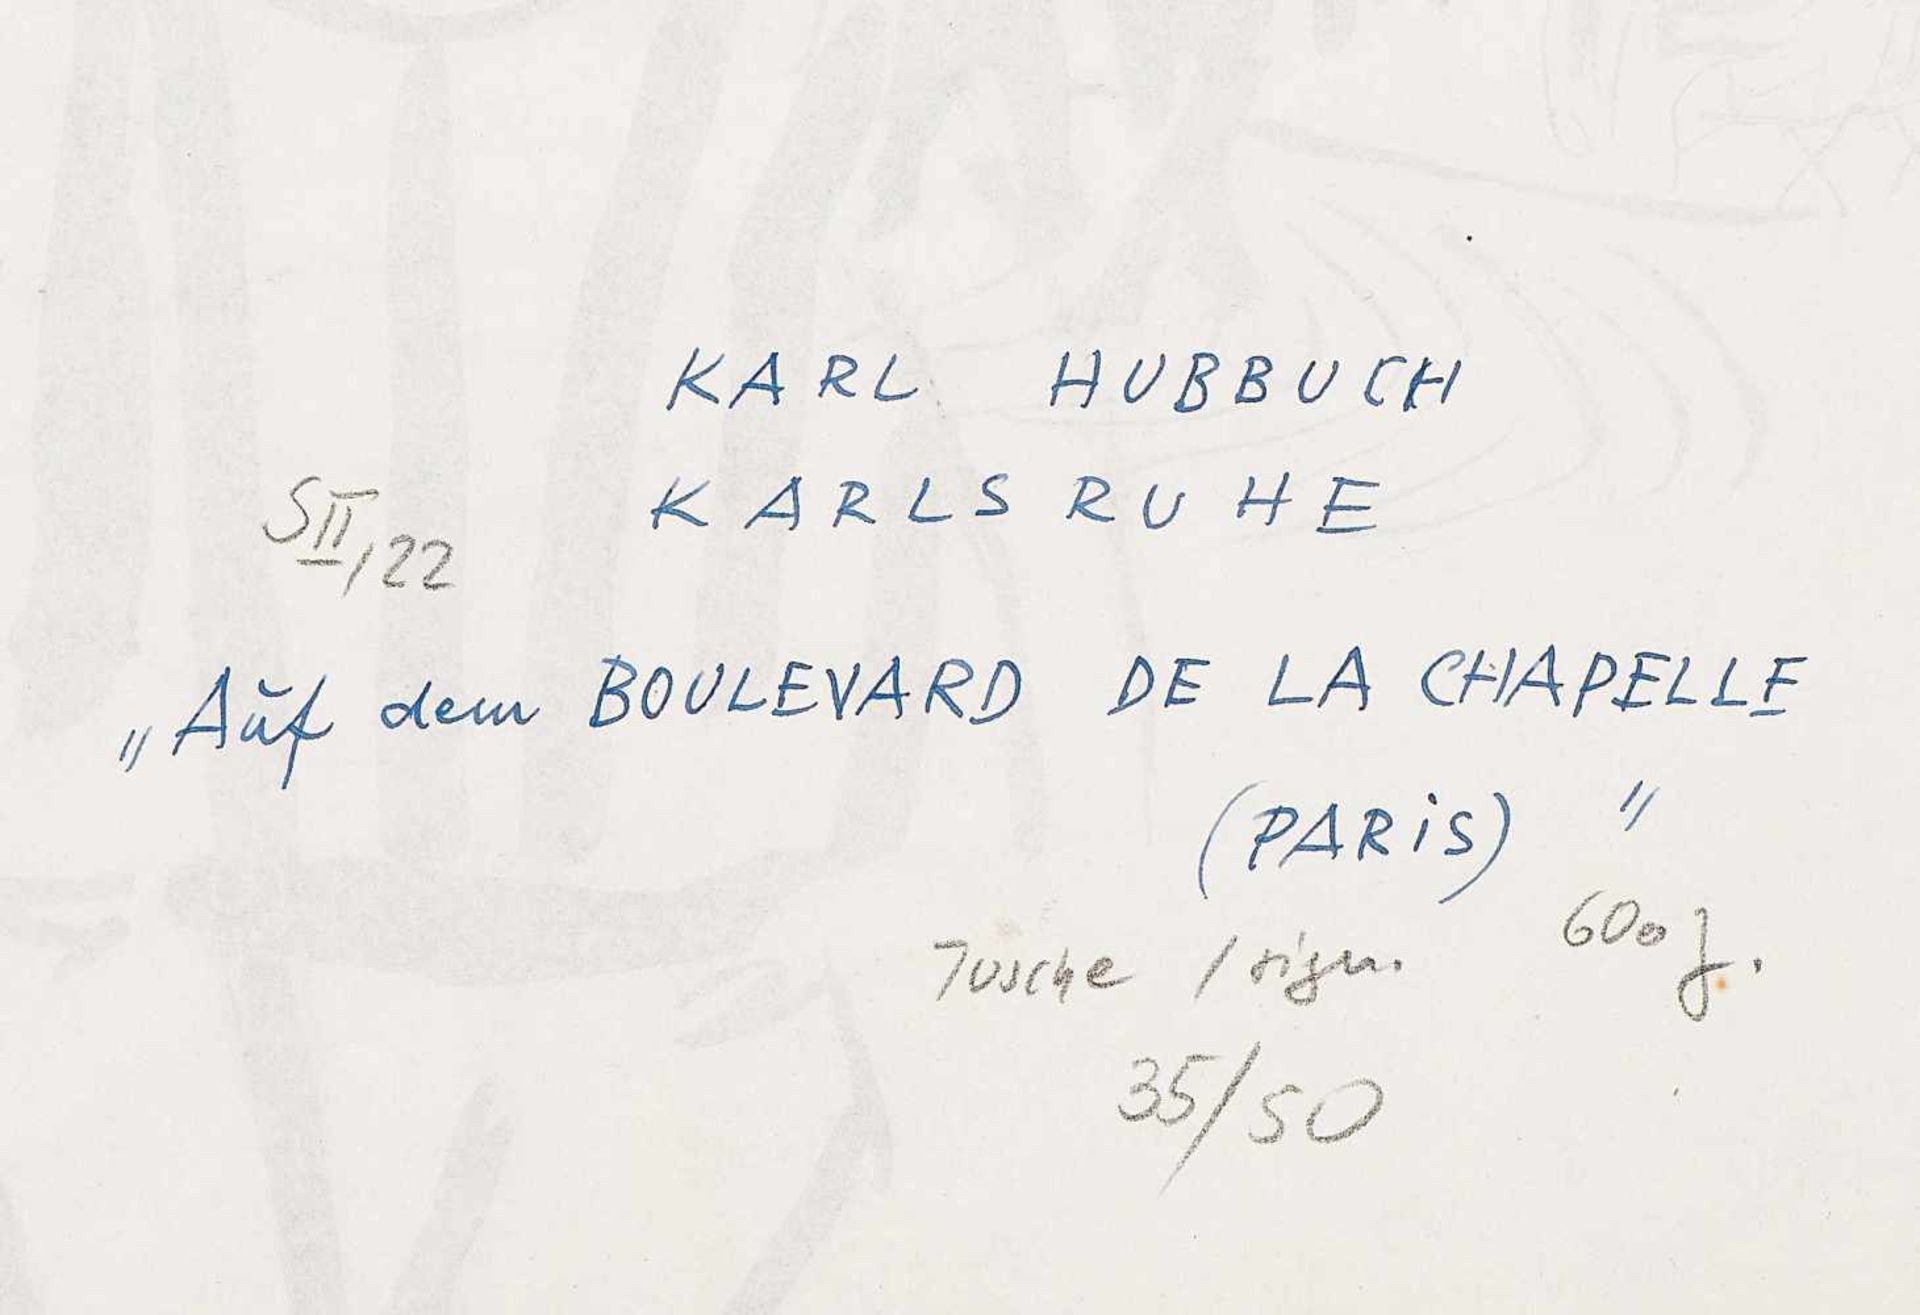 Hubbuch, Karl1891 Karlsruhe - 1979 ebd.«Auf dem Boulevard de la Chapelle (Paris)».Wohl 1958. - Bild 2 aus 2